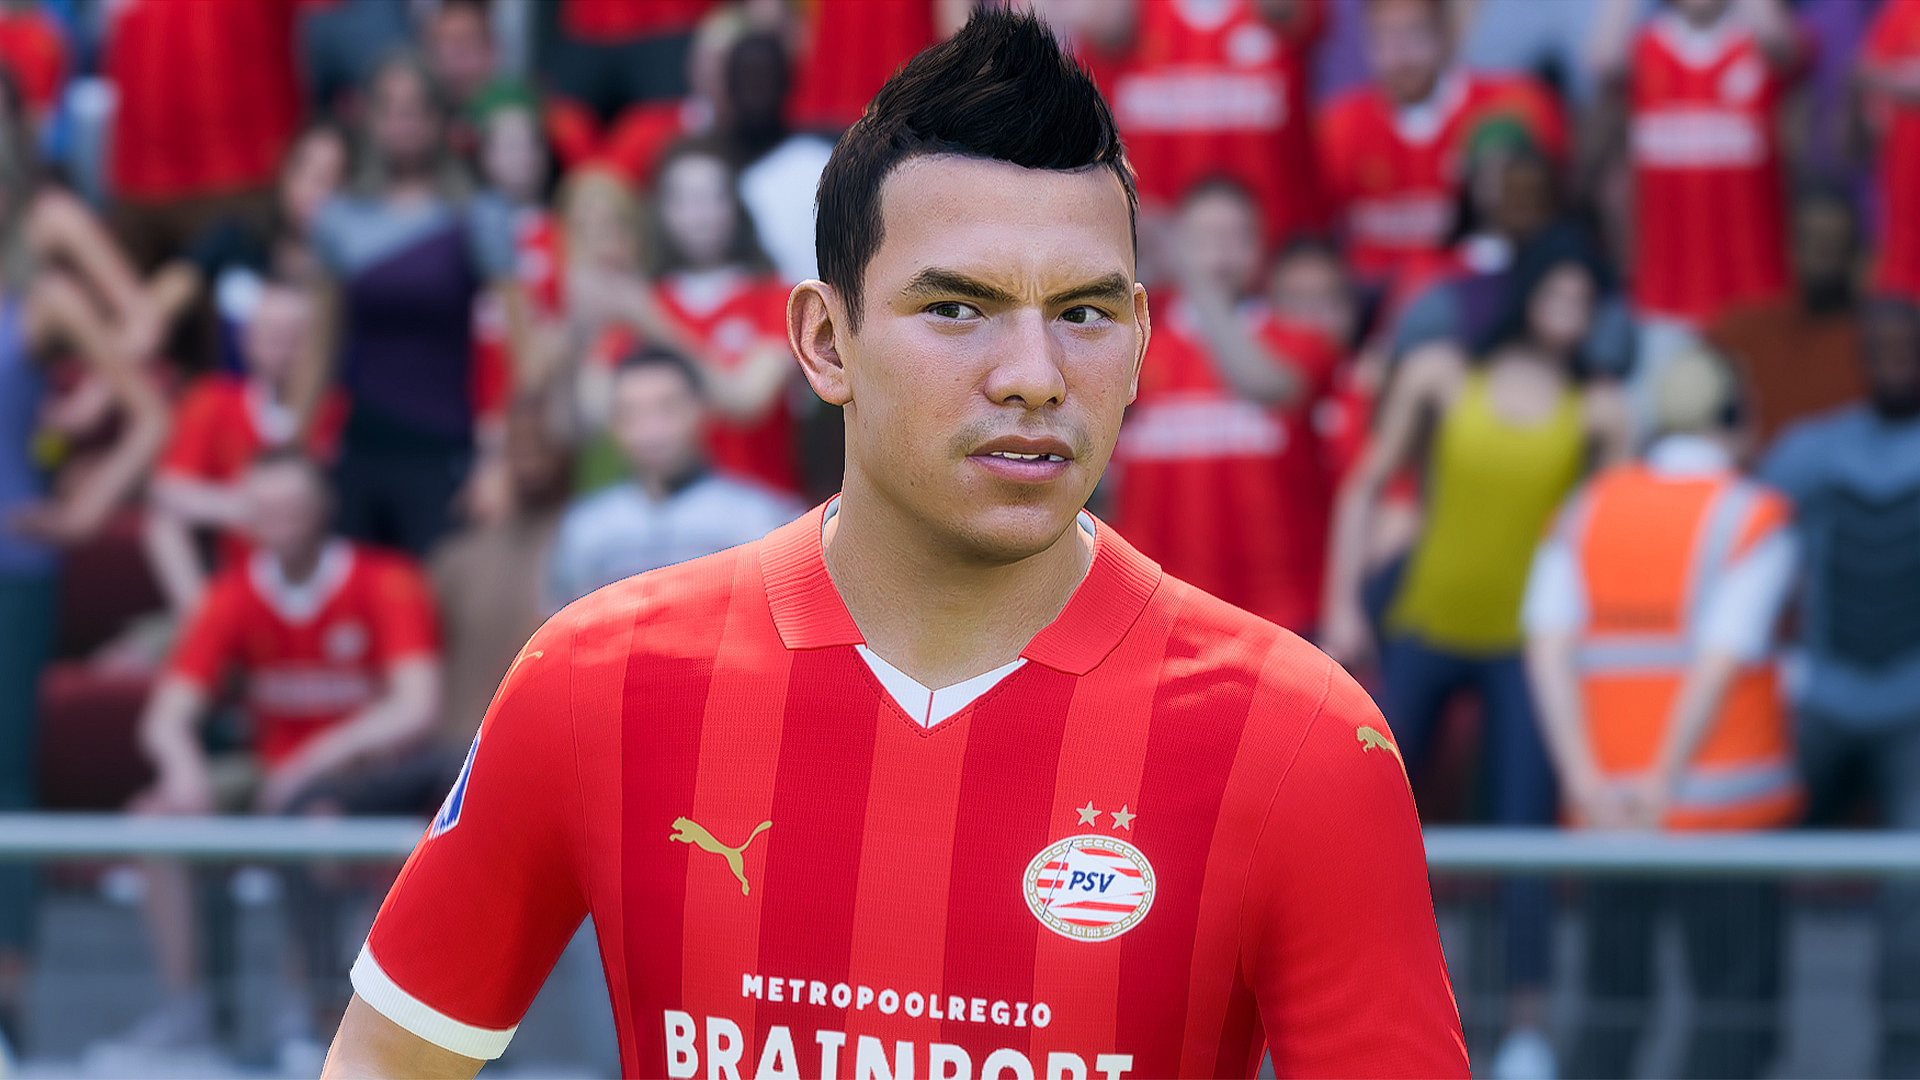 EA Sports FC 24 - Florian Wirtz is Bundesliga Player Of The Month (POTM)  for October •